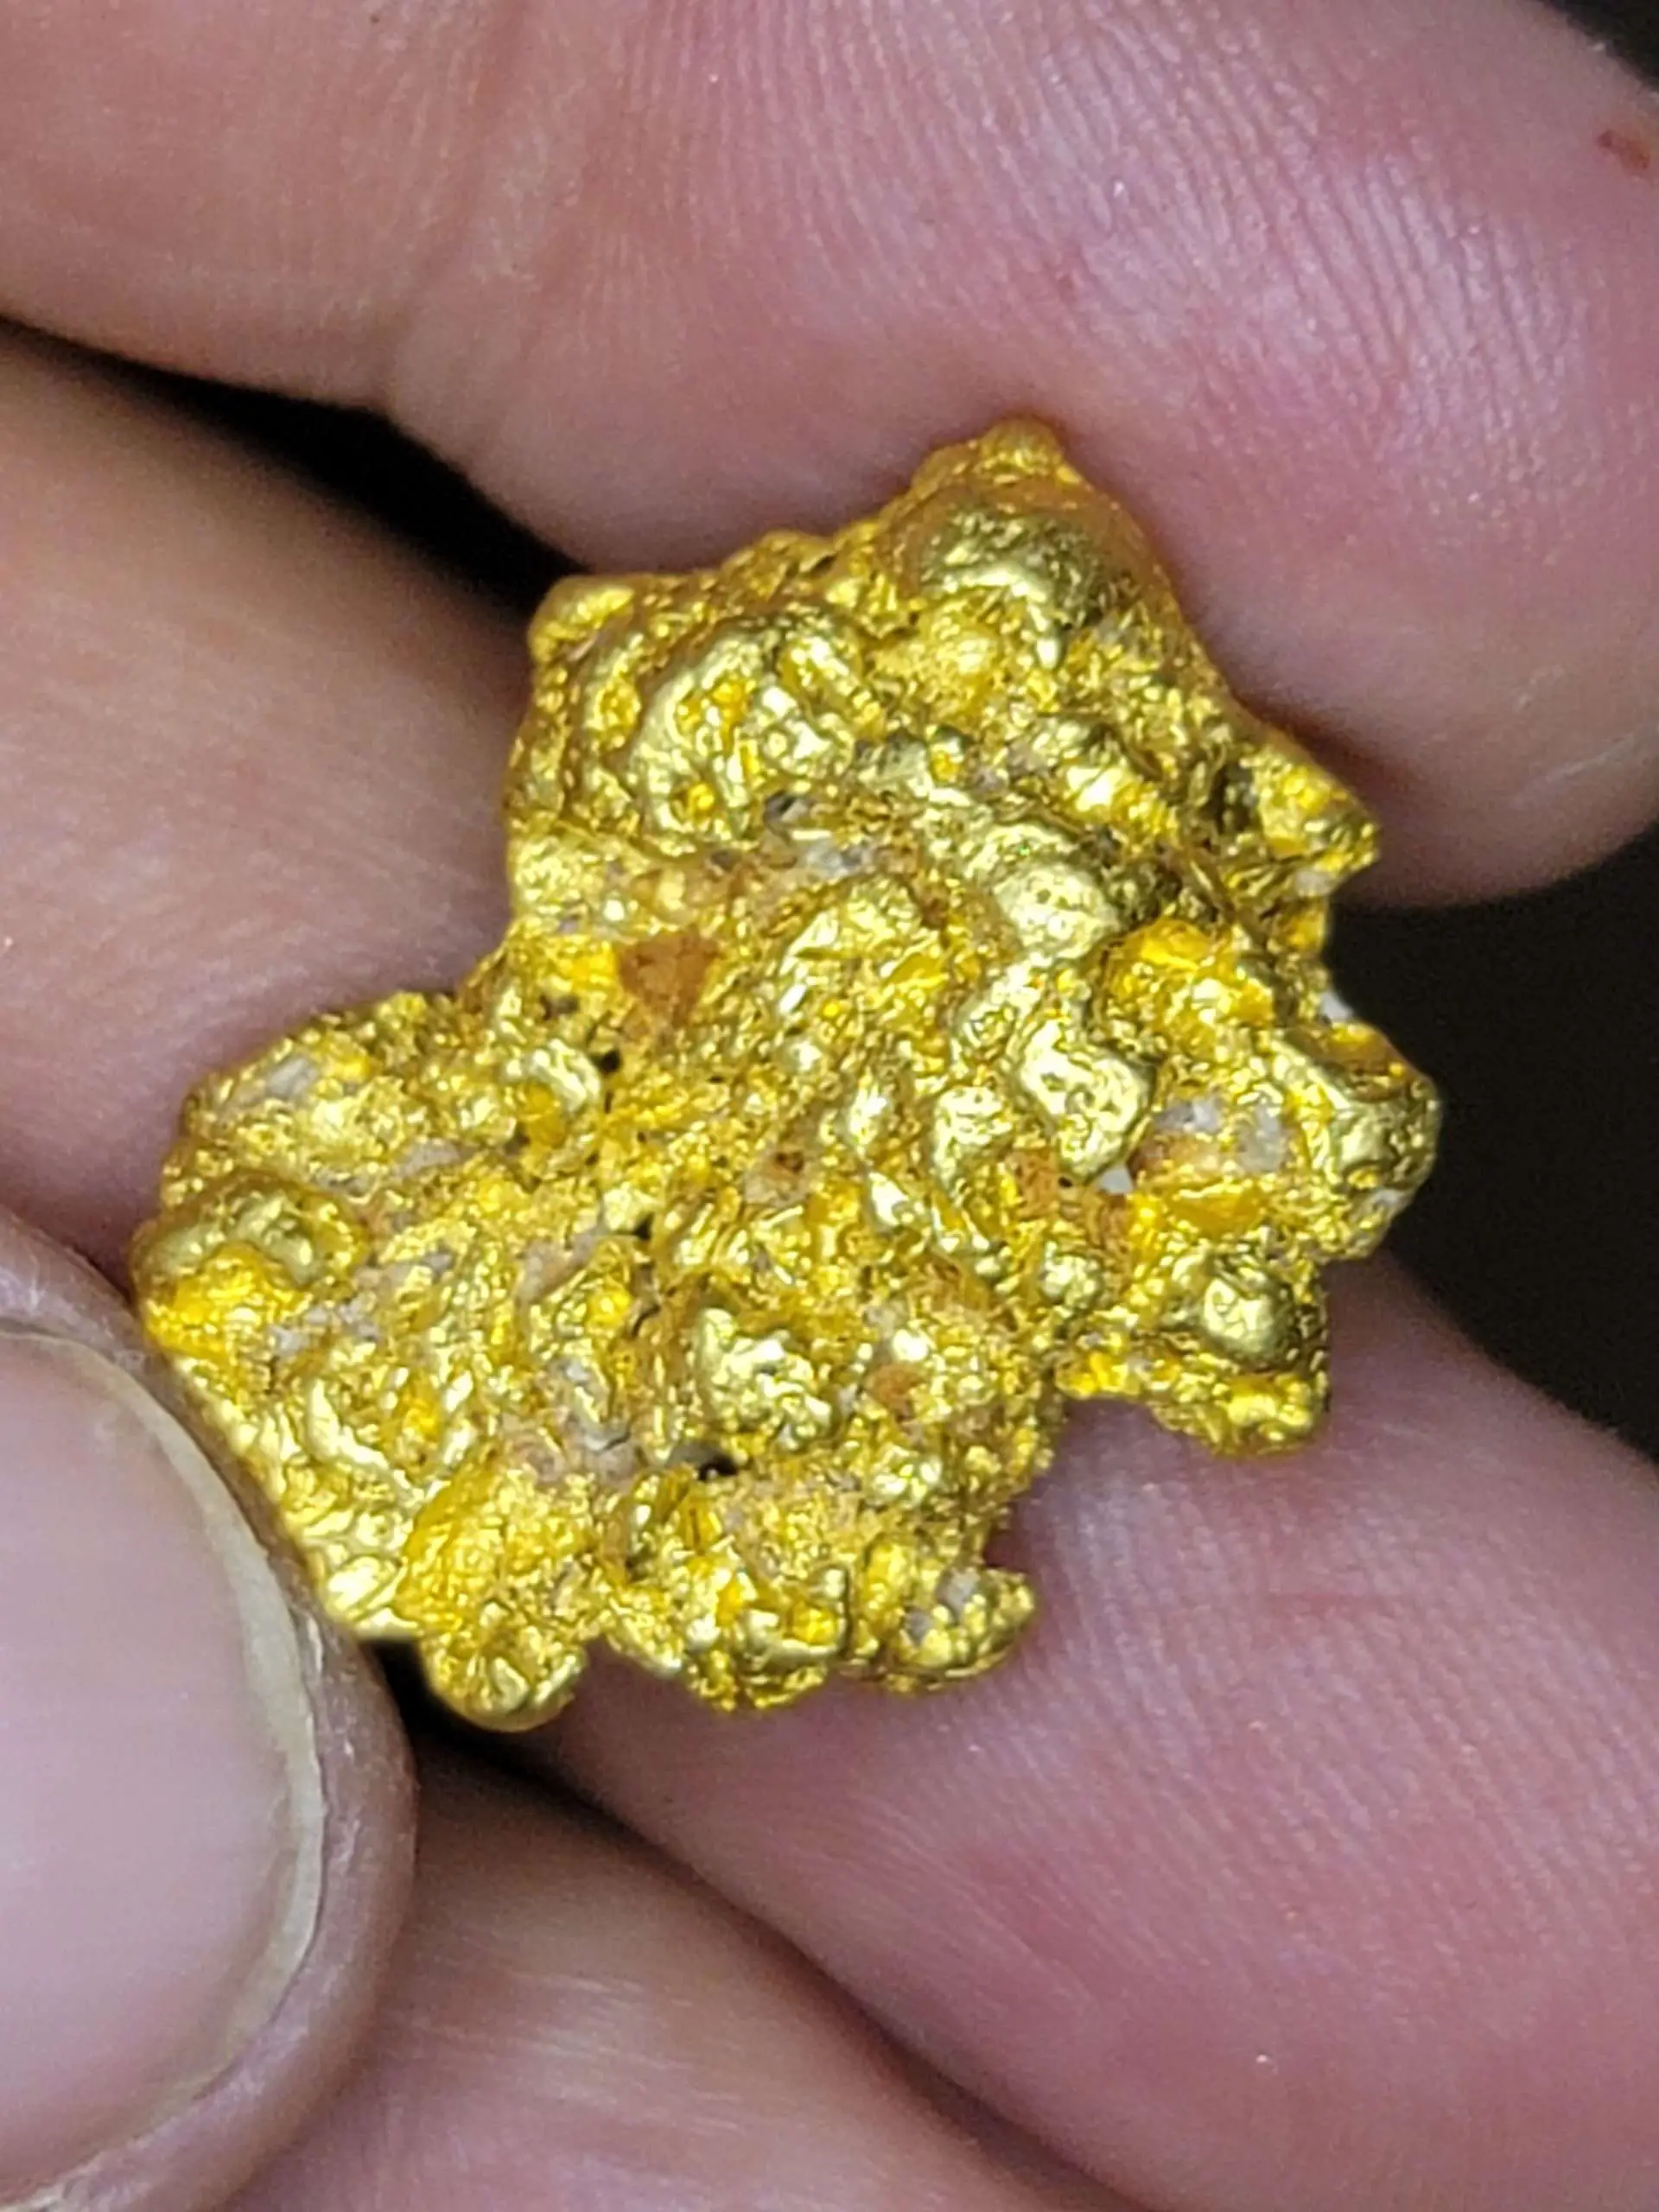 15.72 gram very coarse Idaho Gold nugget